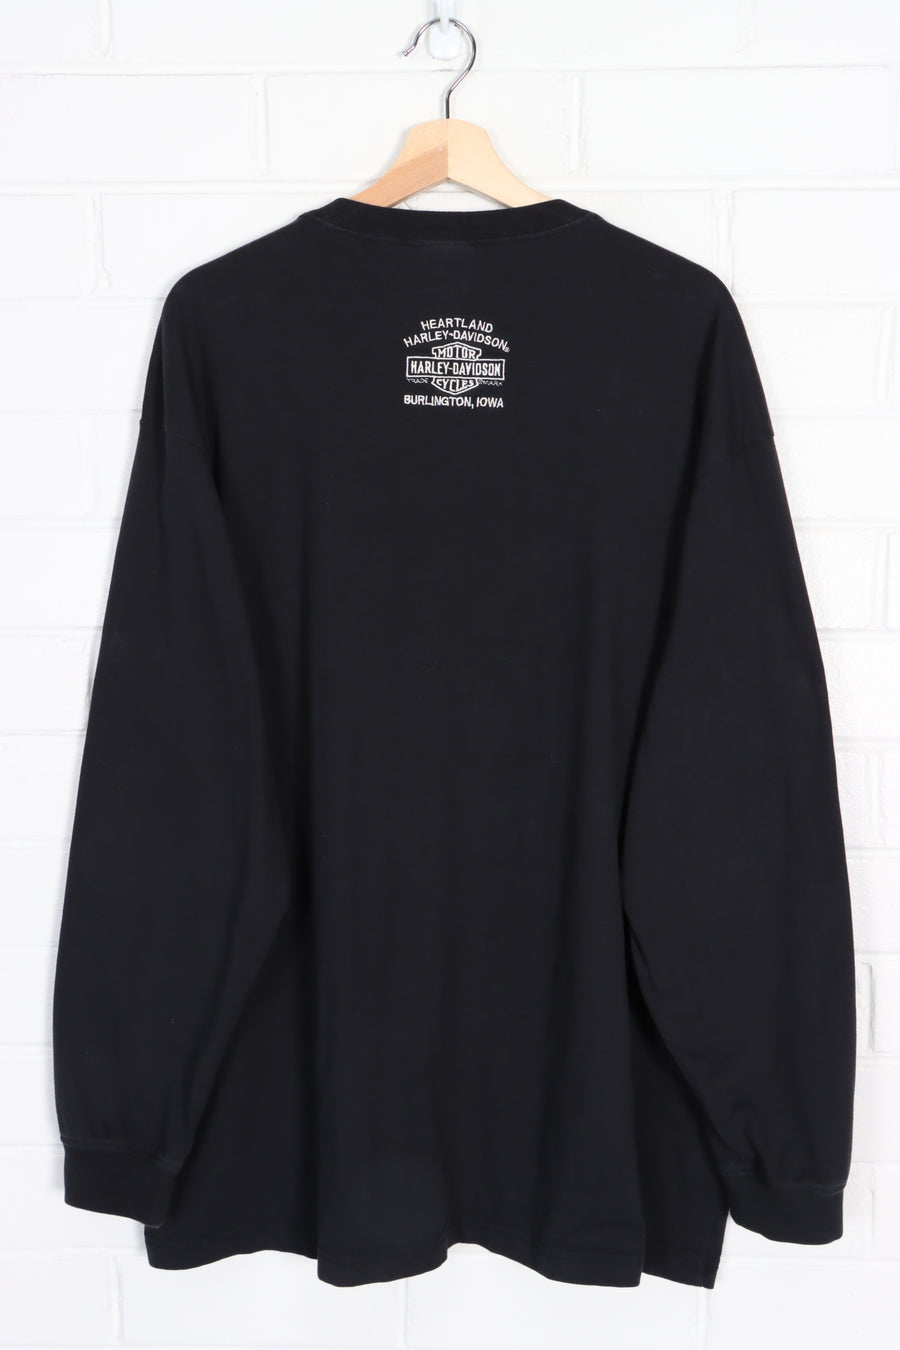 HARLEY DAVIDSON Embroidered Logo Long Sleeve Henley T-Shirt (3XL)